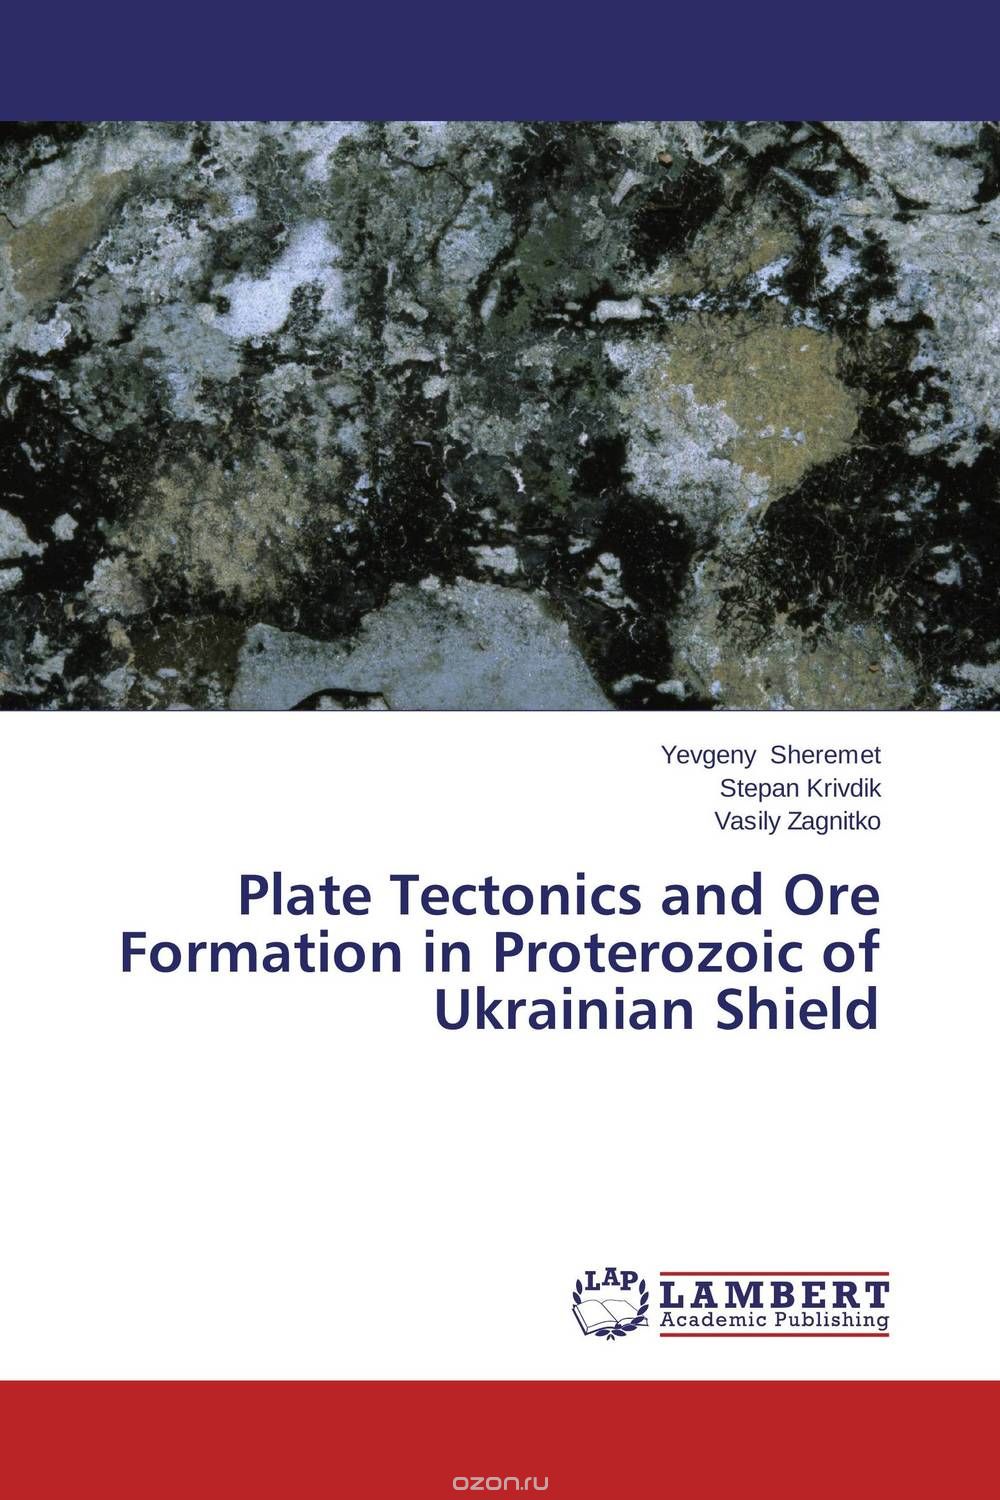 Скачать книгу "Plate Tectonics and Ore Formation in Proterozoic of Ukrainian Shield"